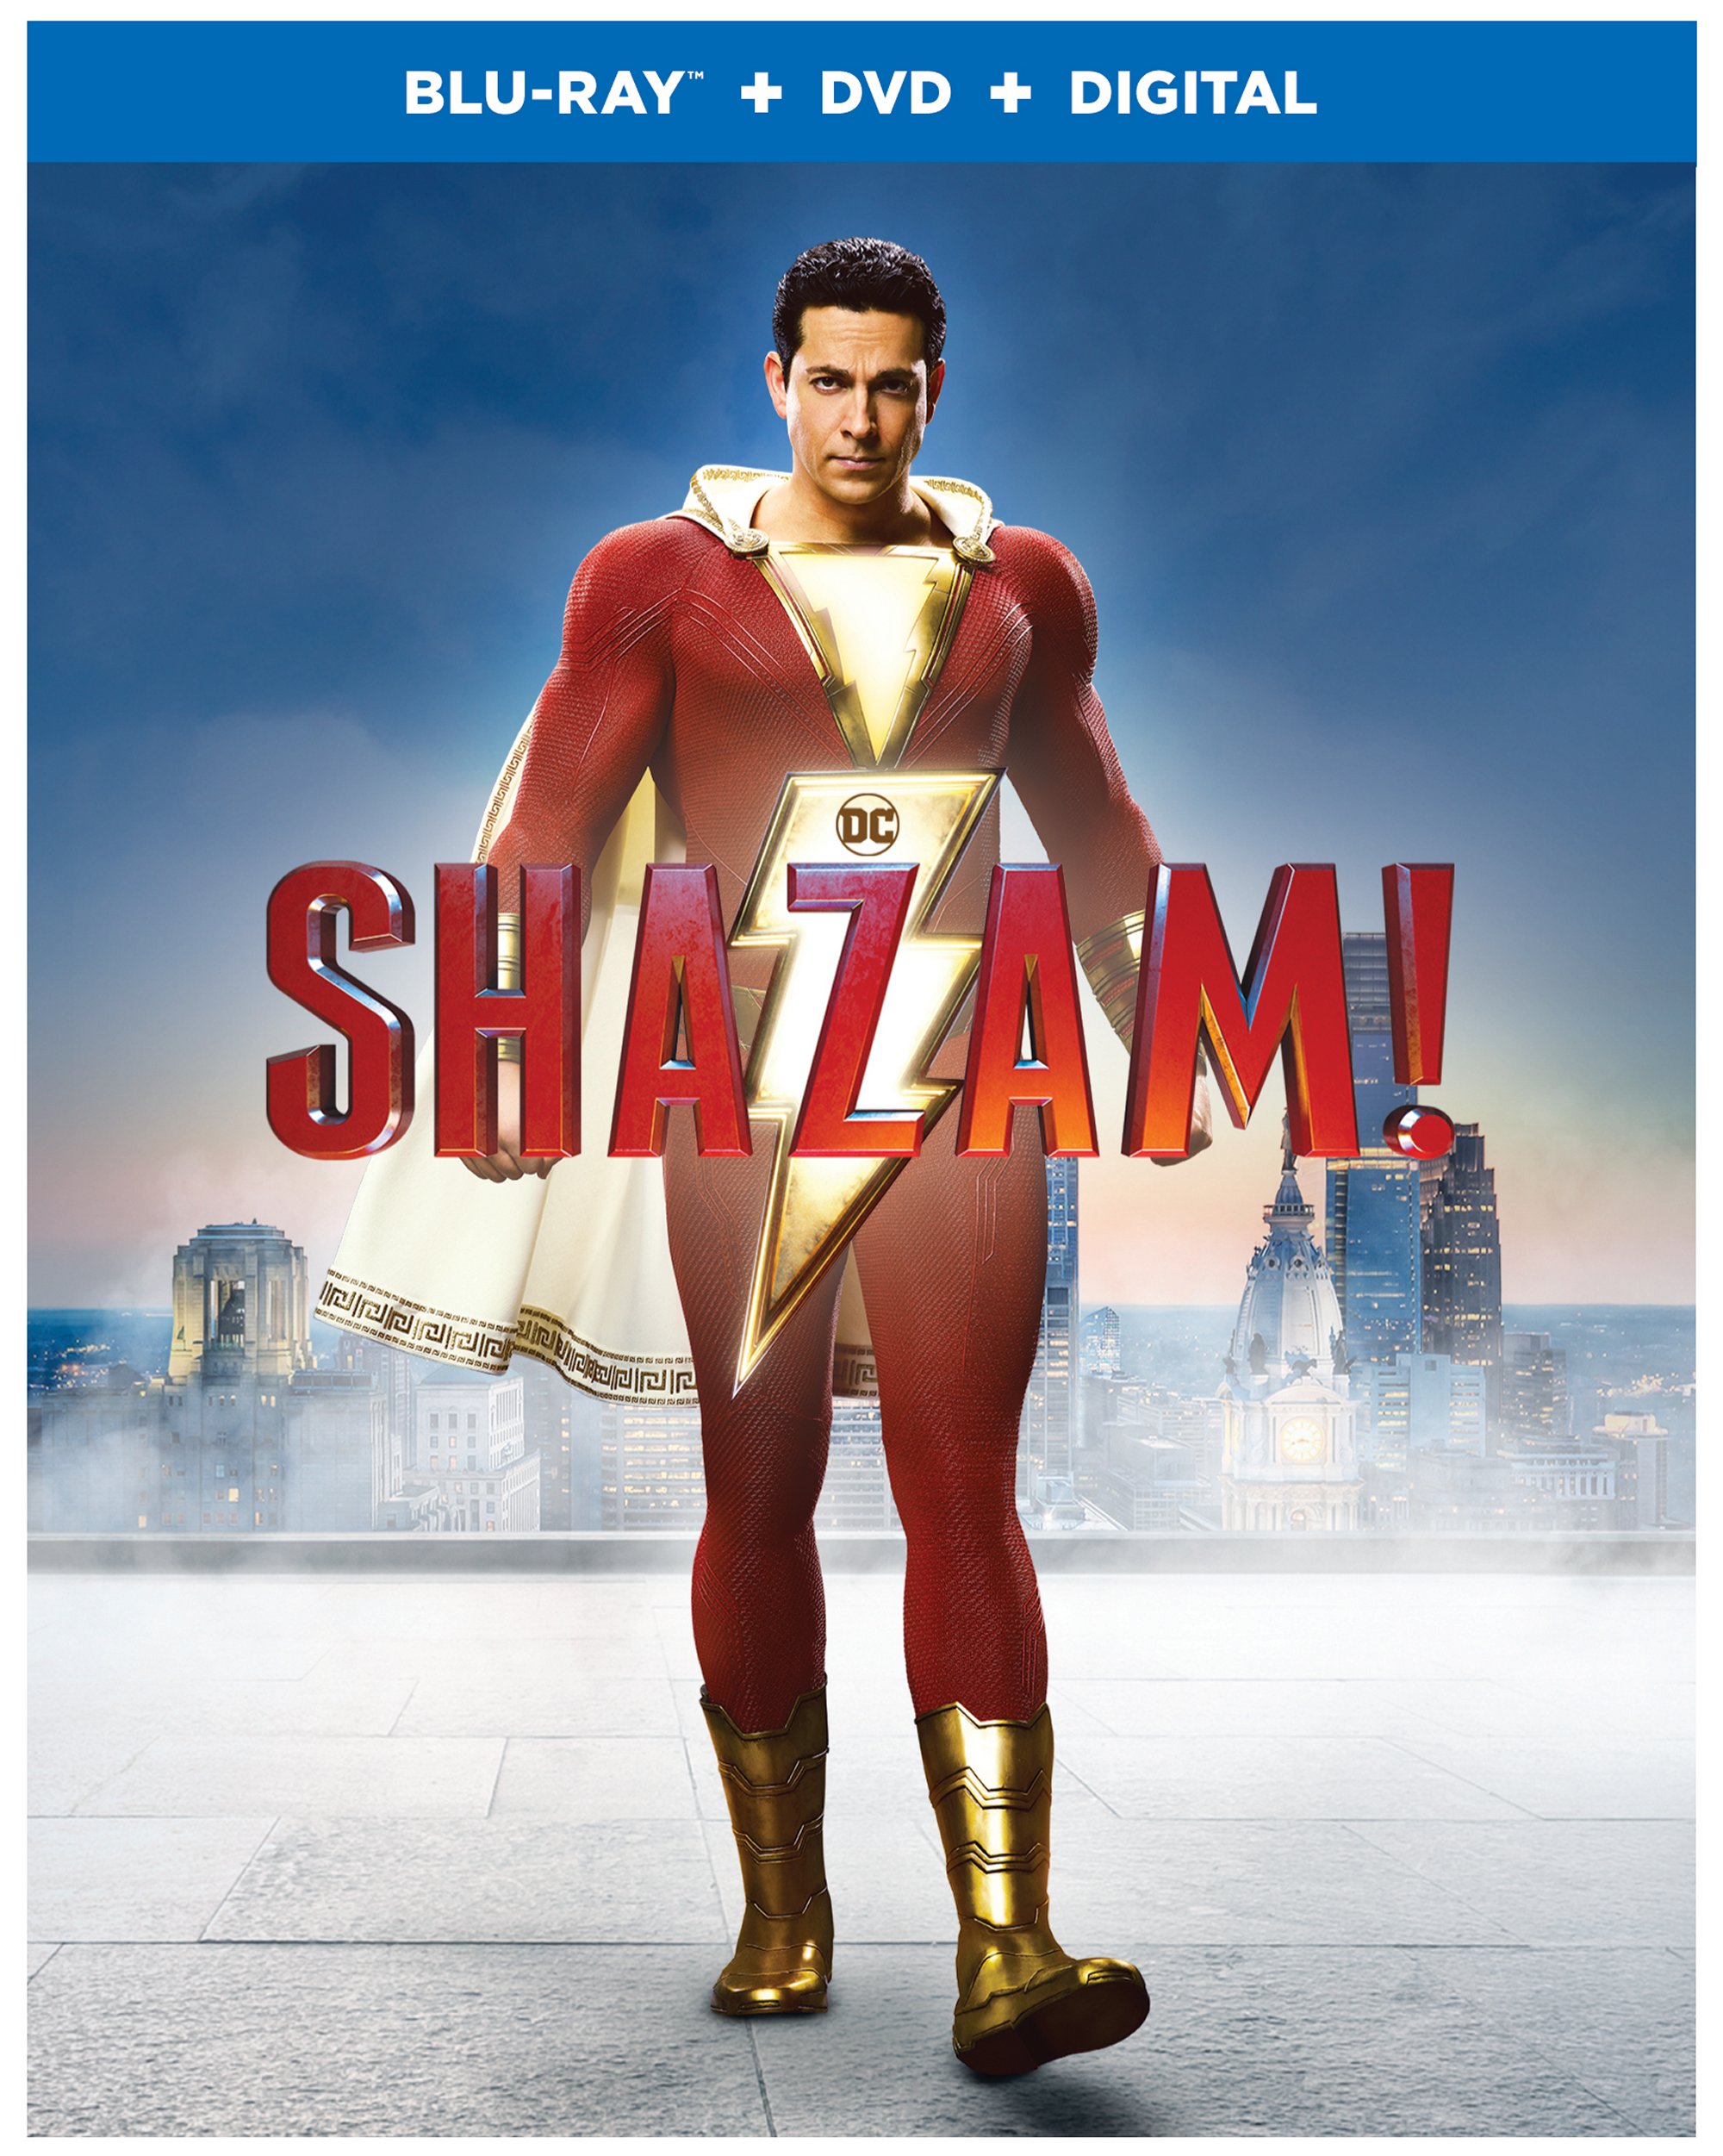 Shazam! Blu-Ray Combo pack (Warner Bros. Home Entertainment)